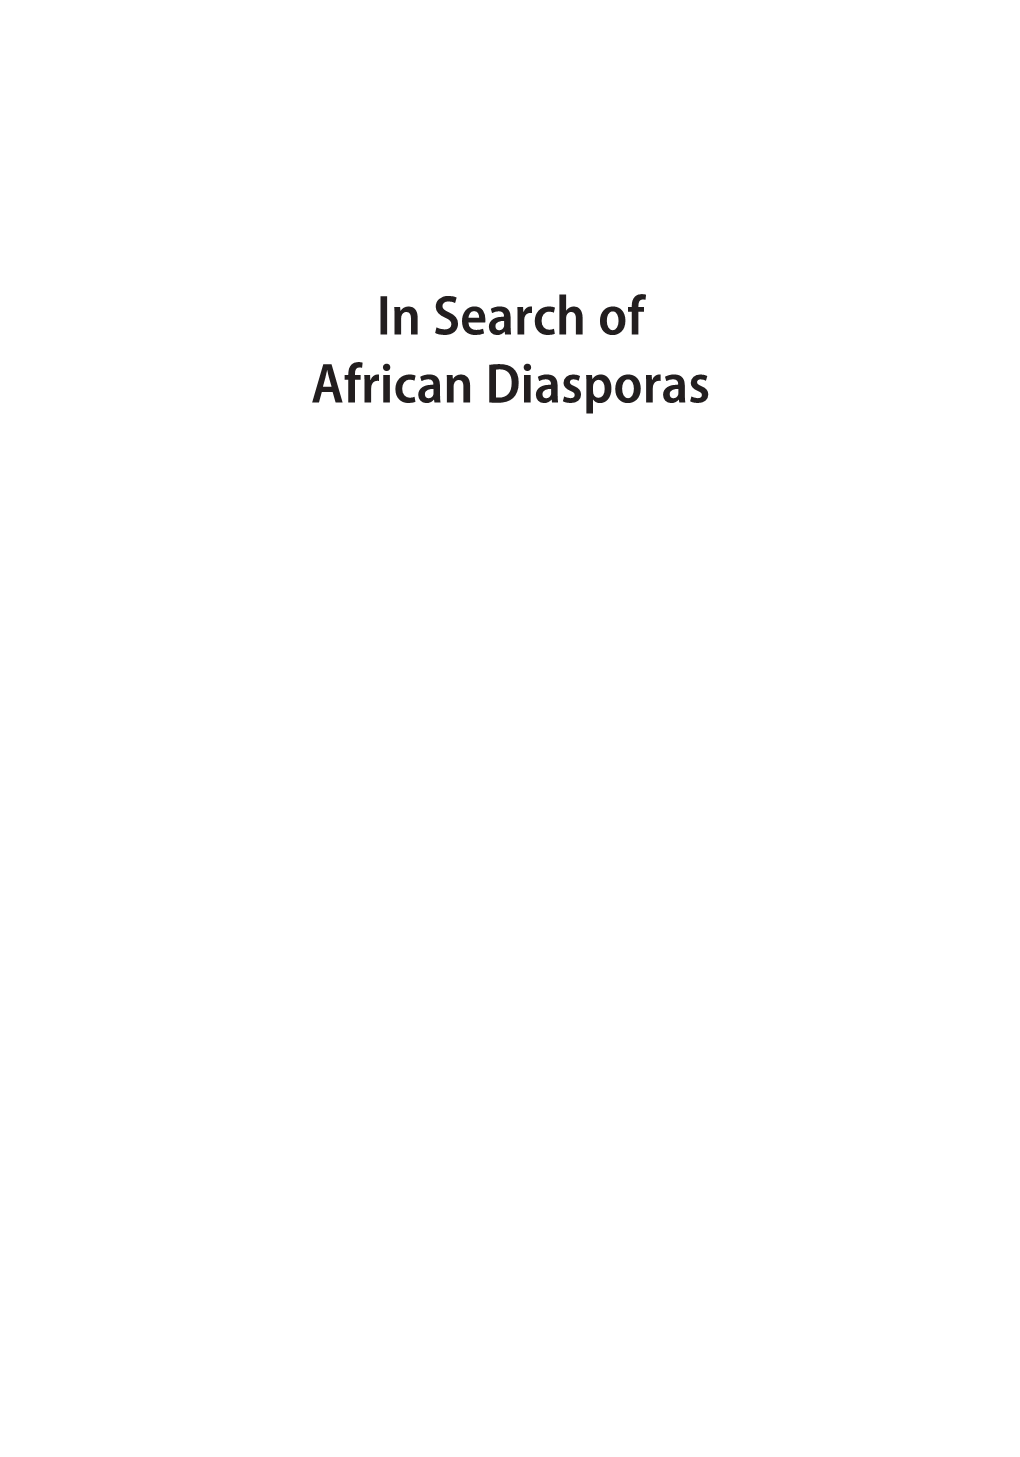 In Search of African Diasporas 00 Zeleza Final 3/1/12 9:22 AM Page Ii